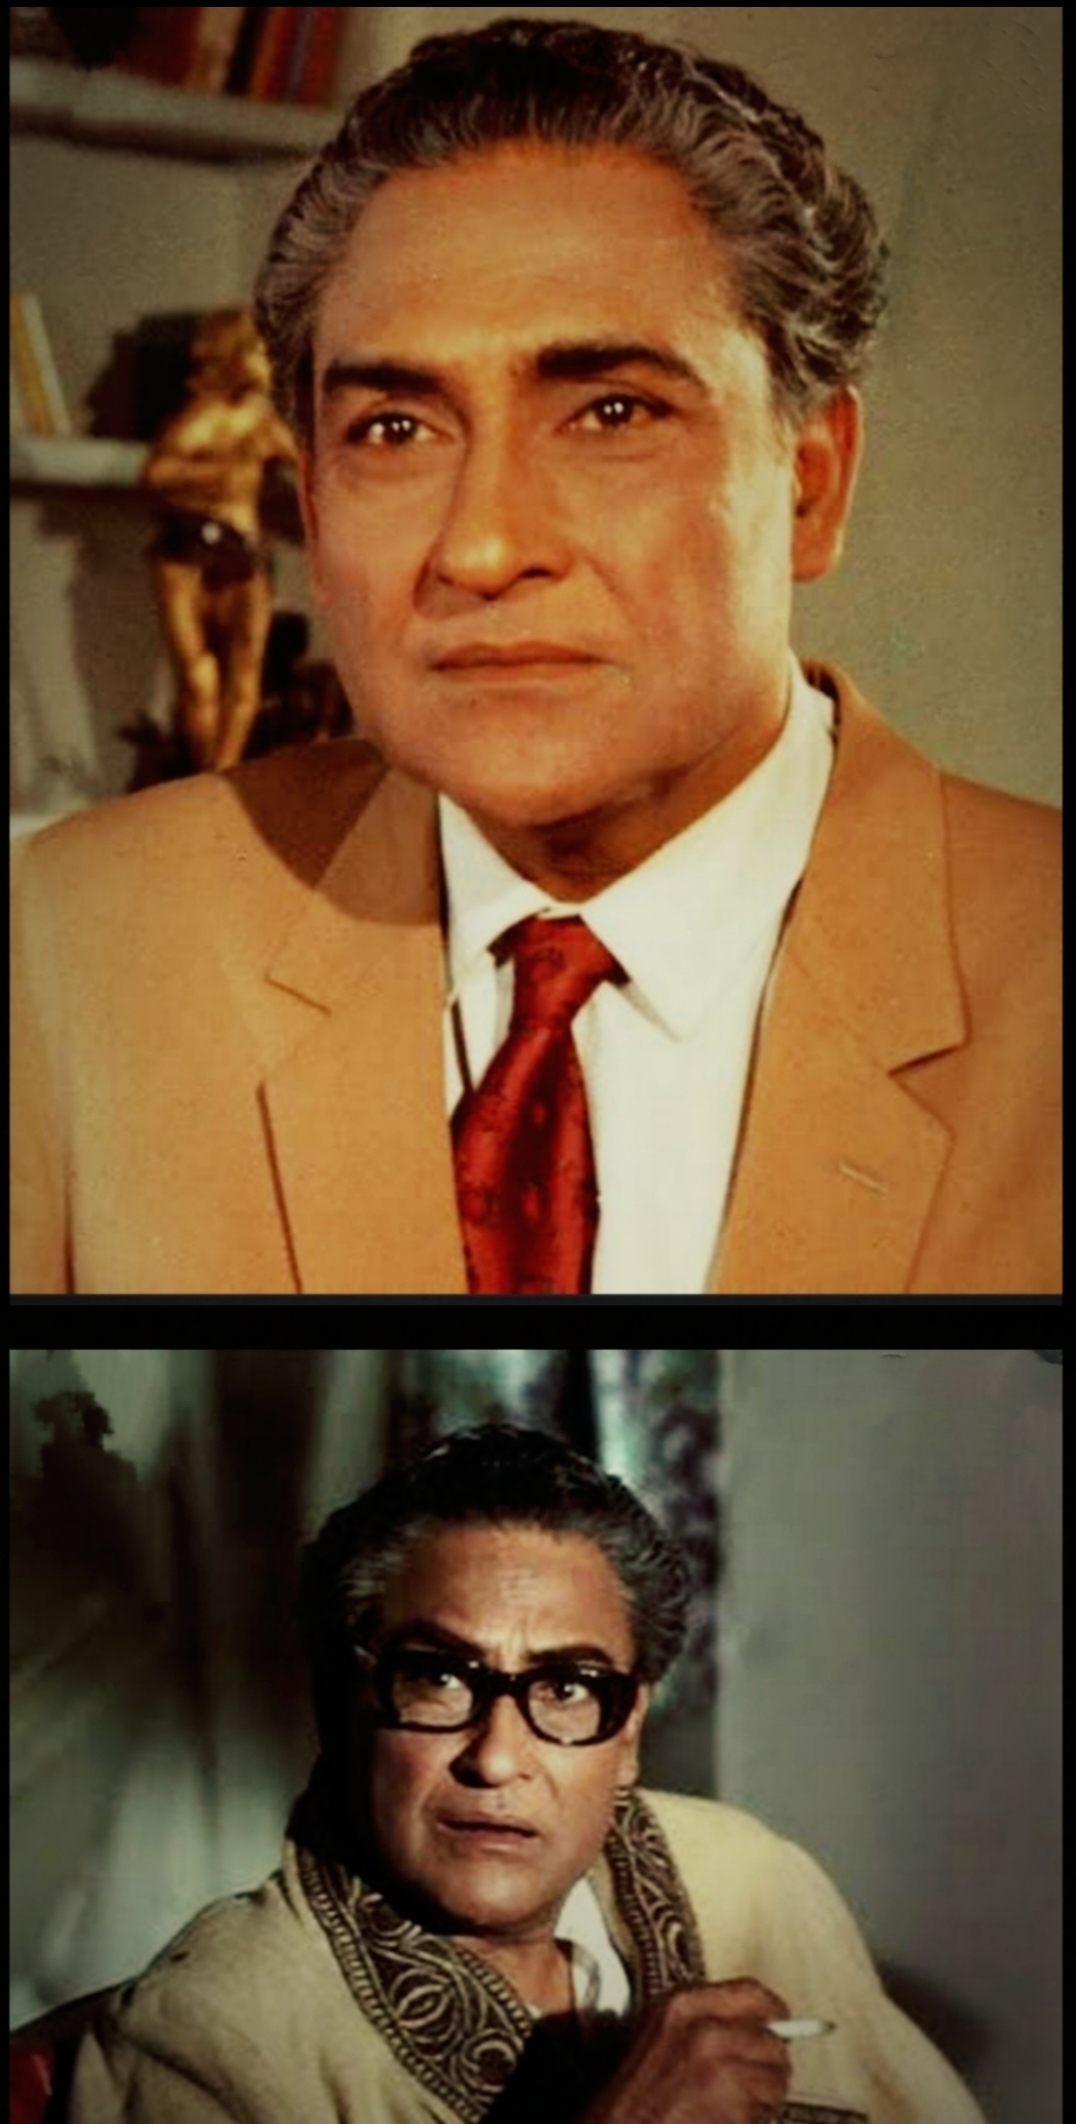 अशोक कुमार साहब (जन्मदिन पर विशेष)'s image